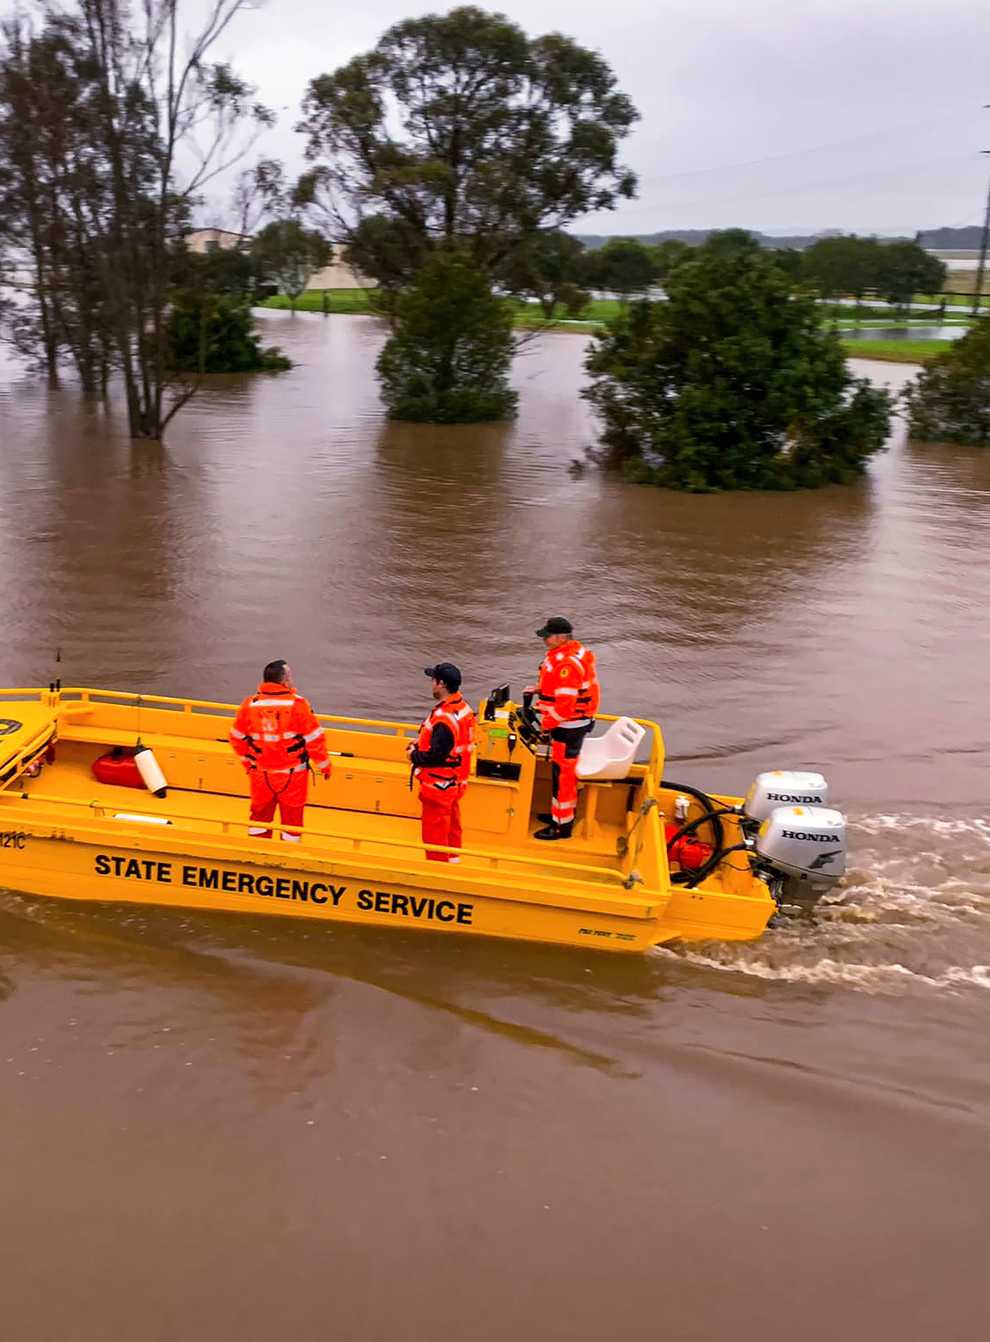 A boat patrols the Hunter River near Hinton, Australia (State Emergency Service via AP)